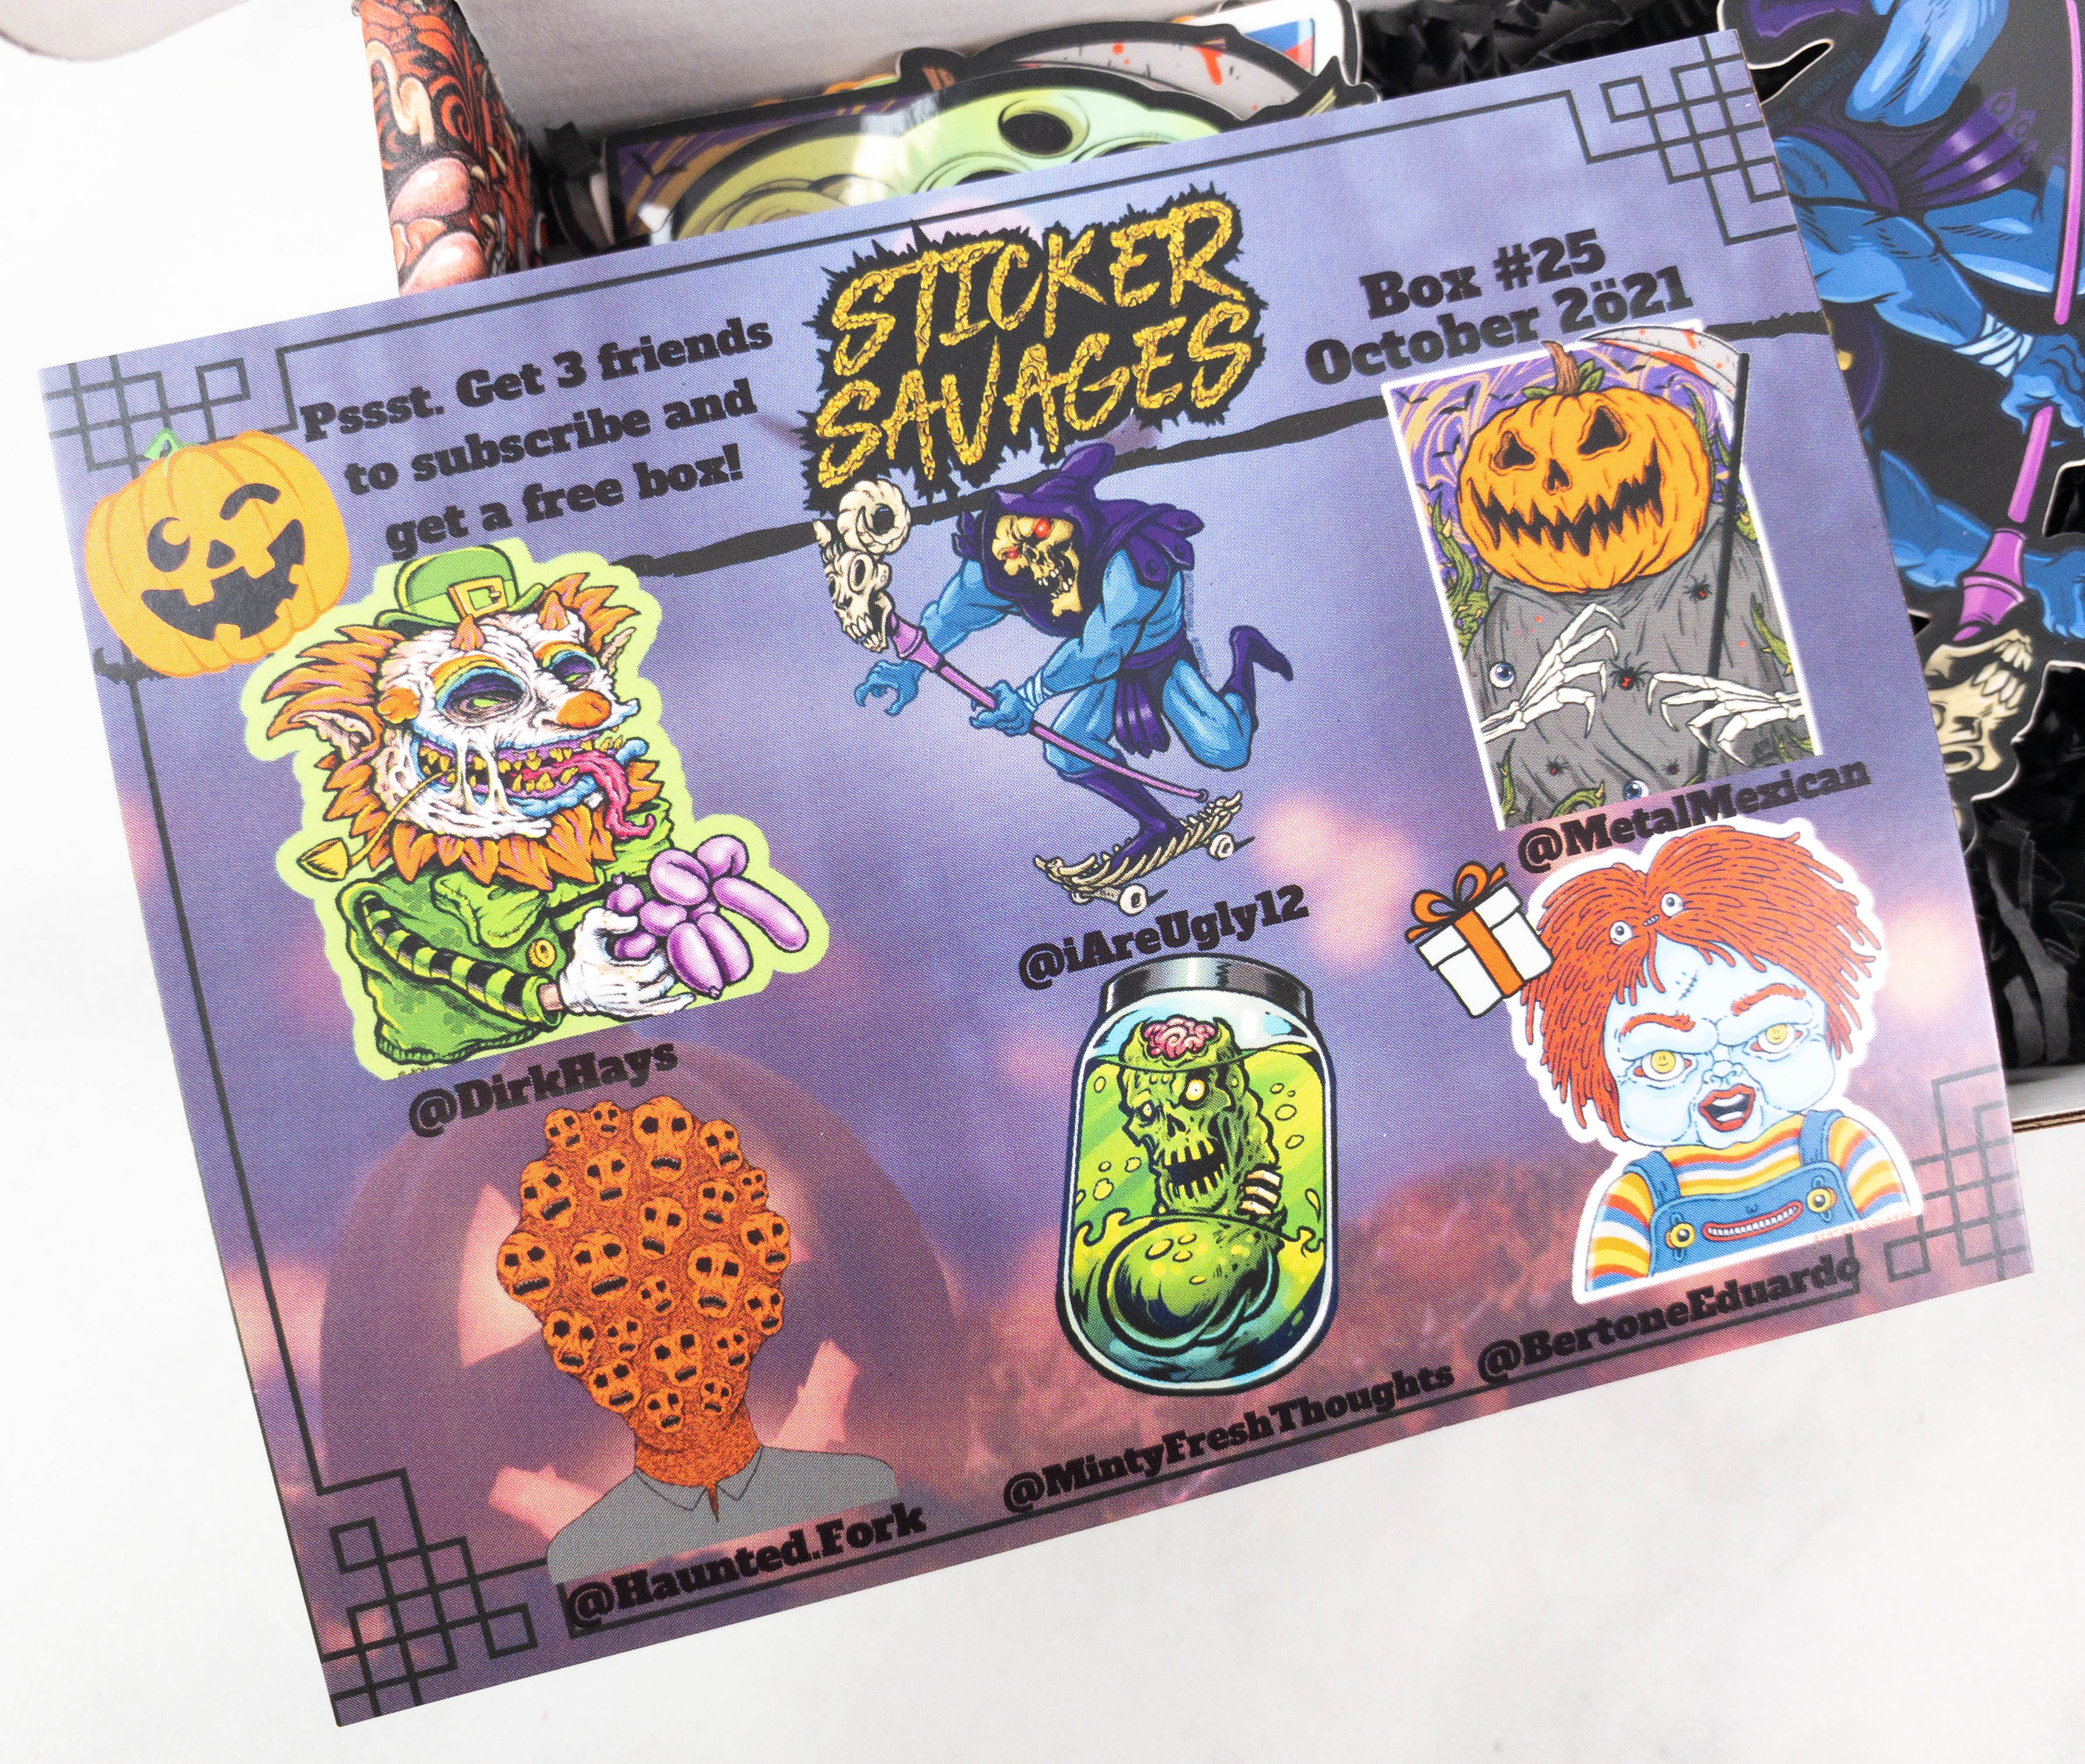 Sticker Savages October Halloween Unboxing #stickersavages